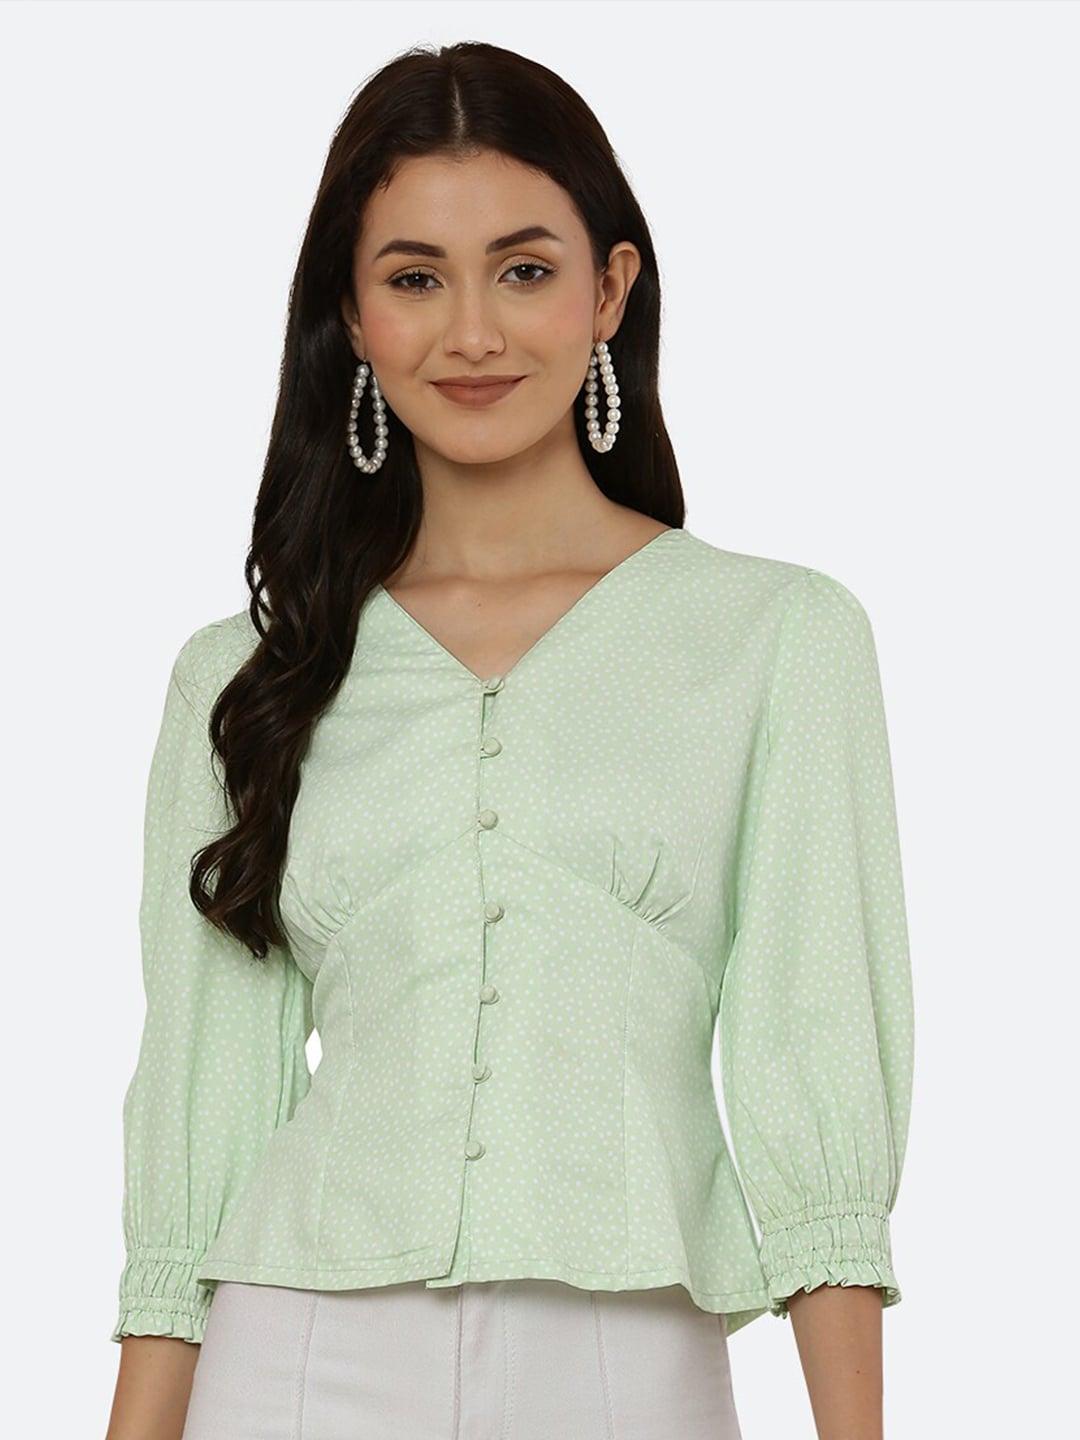 raassio-green-printed-puff-sleeves-shirt-style-top